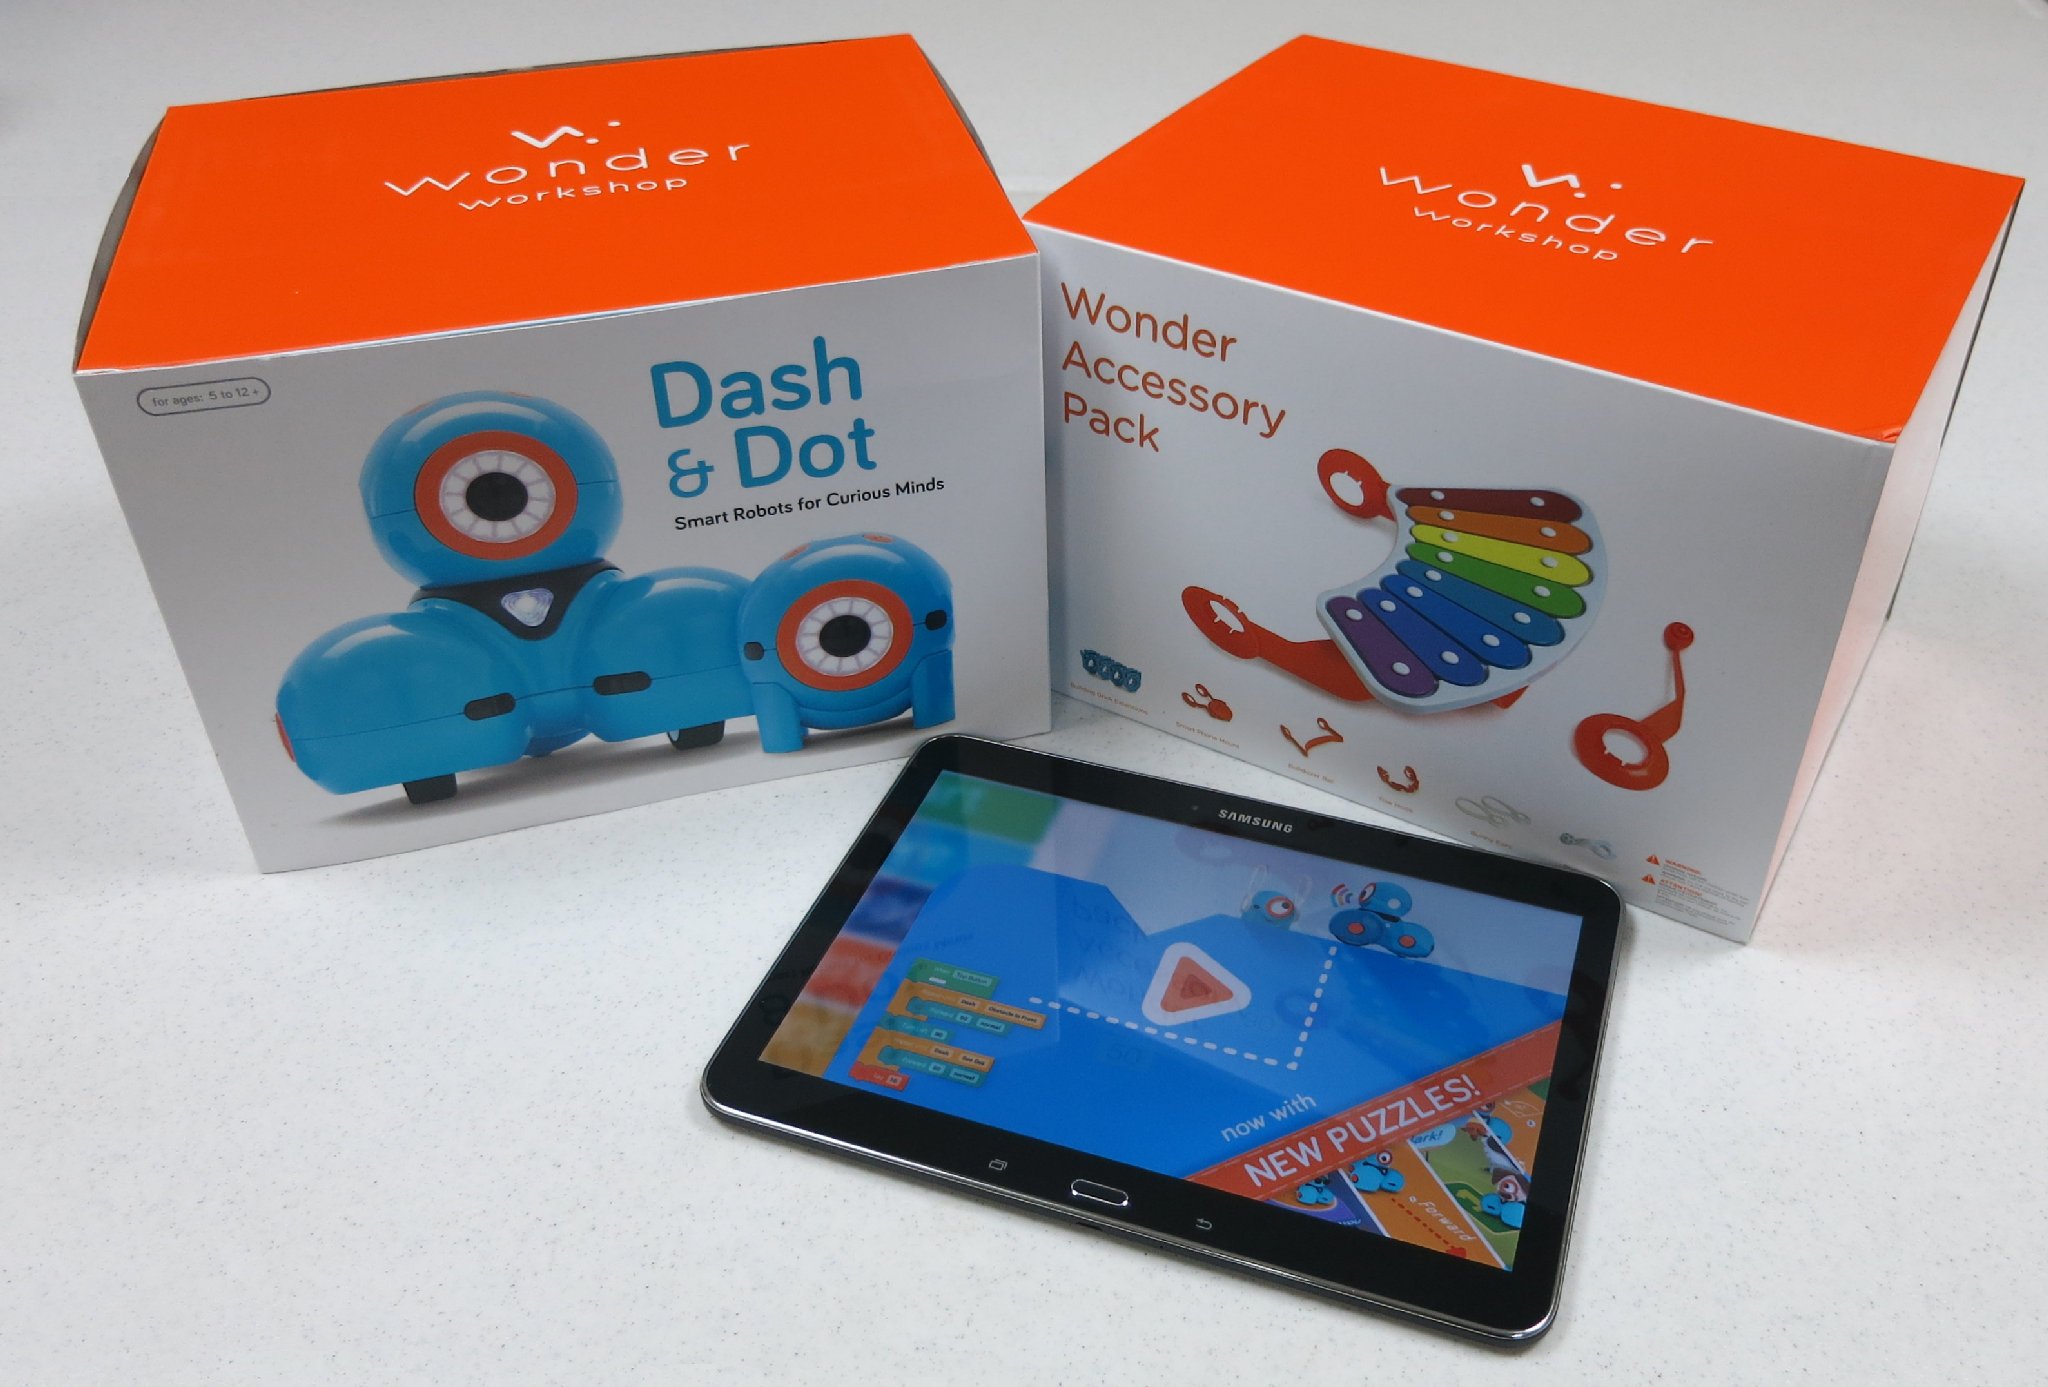 16 Dash and Dot activities ideas  dash and dot robots, dash and dot, dot  robot